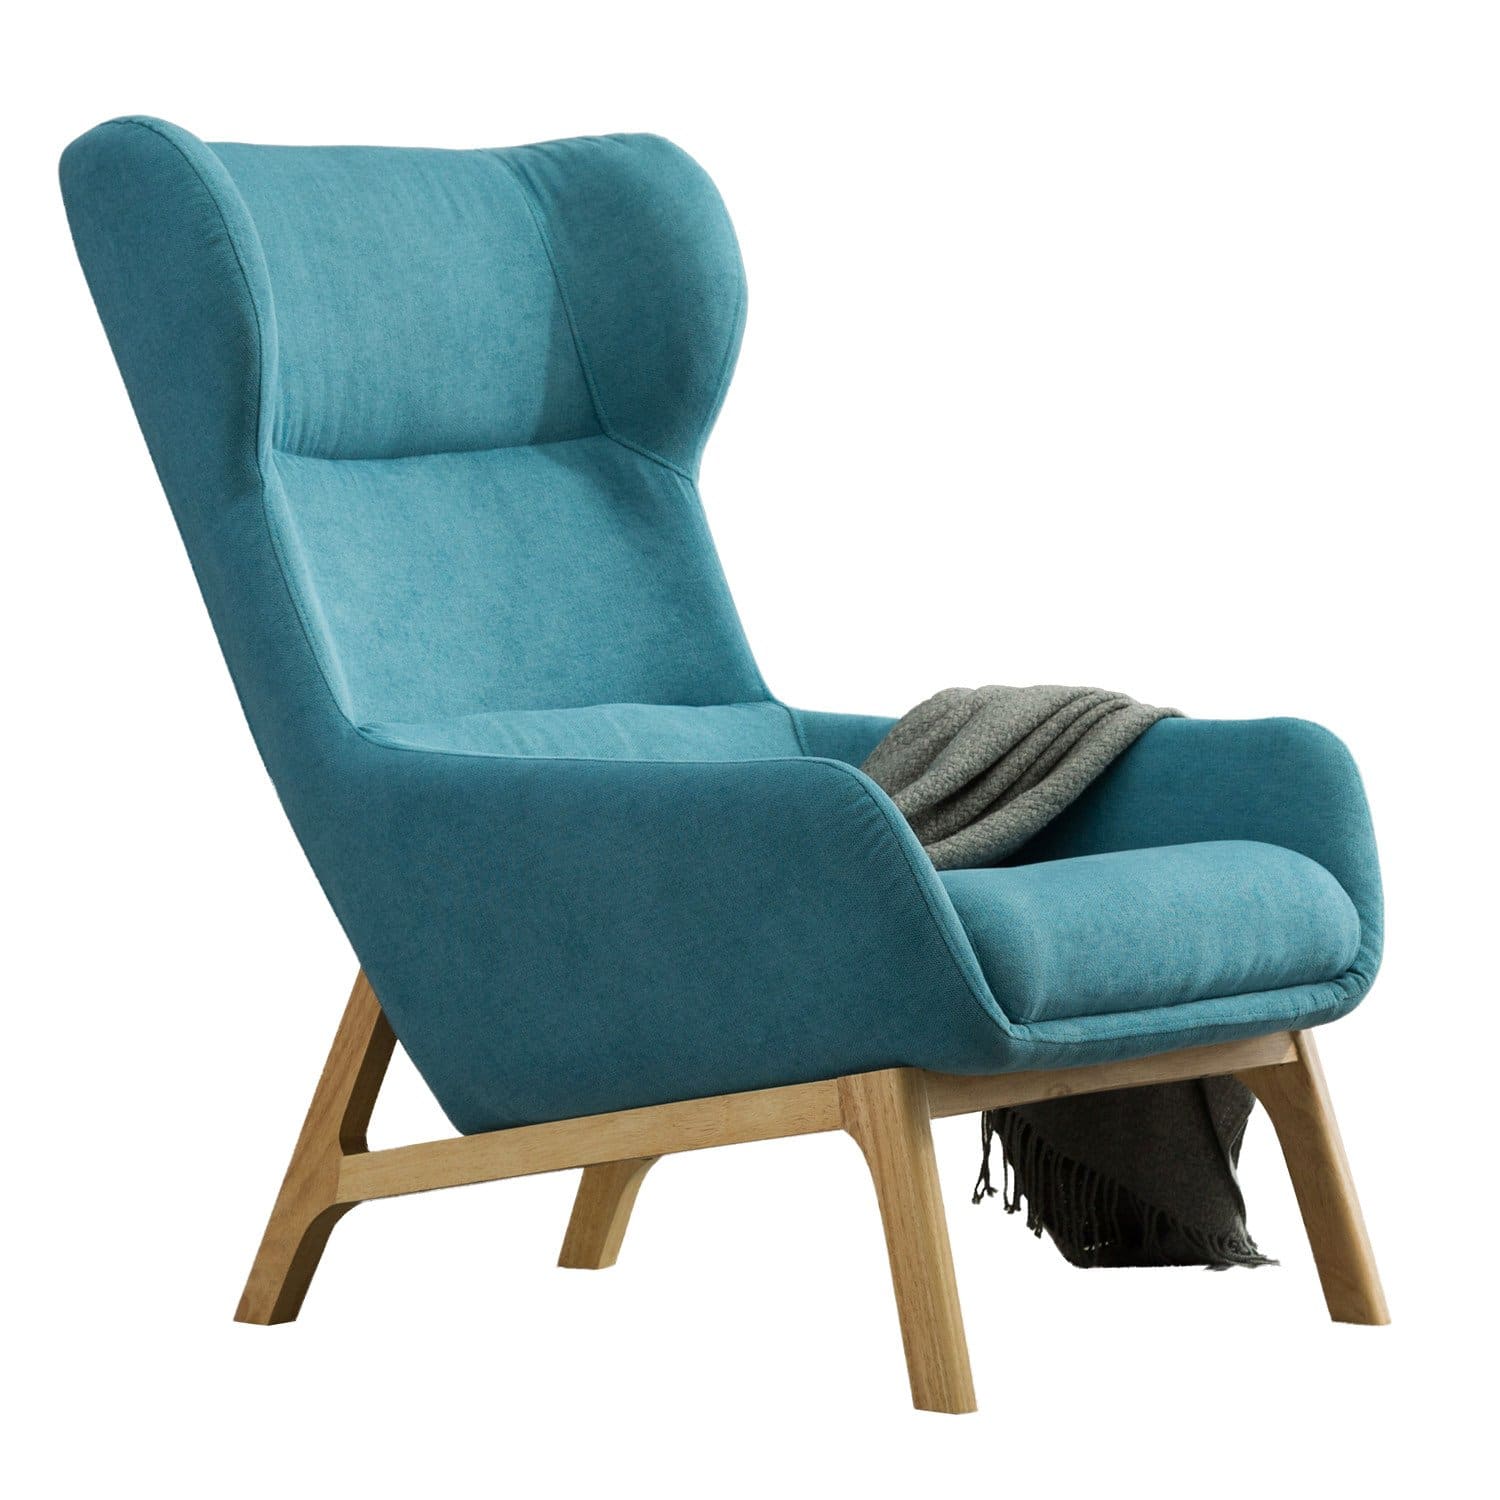 Irene House Contemporary Arm Chair